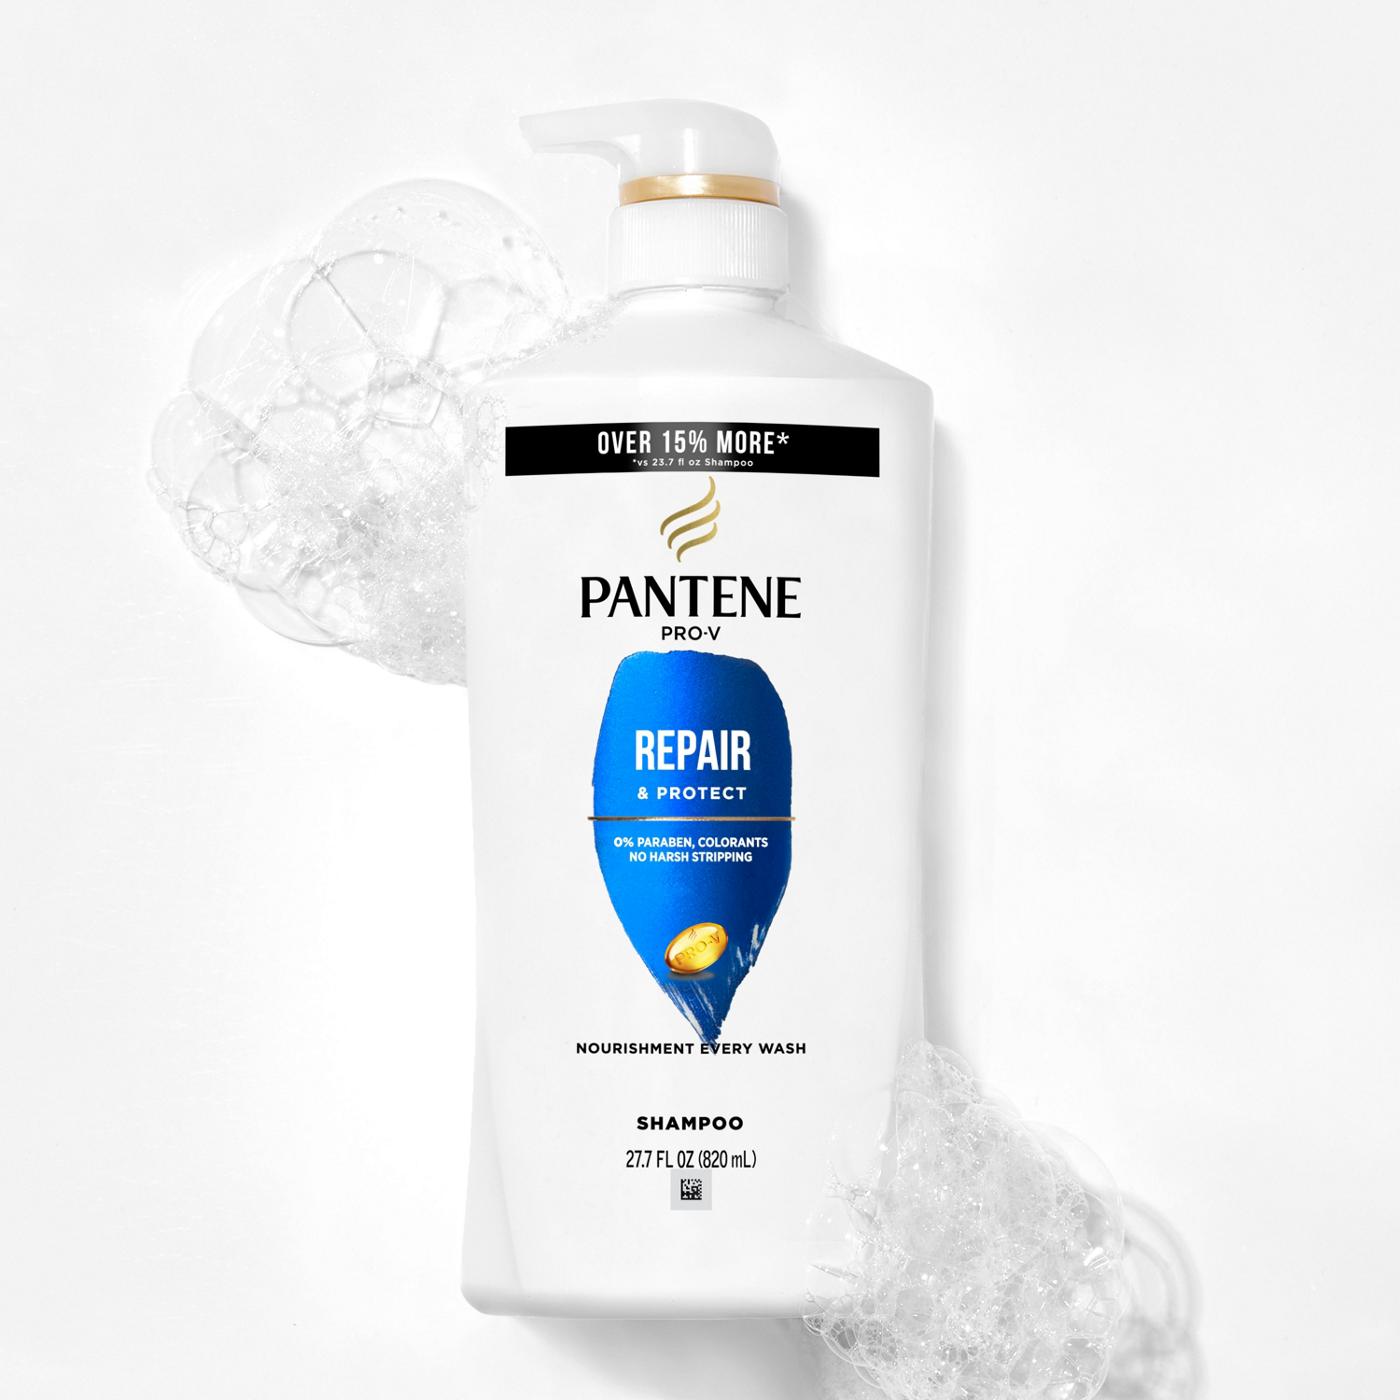 Pantene Pro-V Repair & Protect Shampoo; image 8 of 9